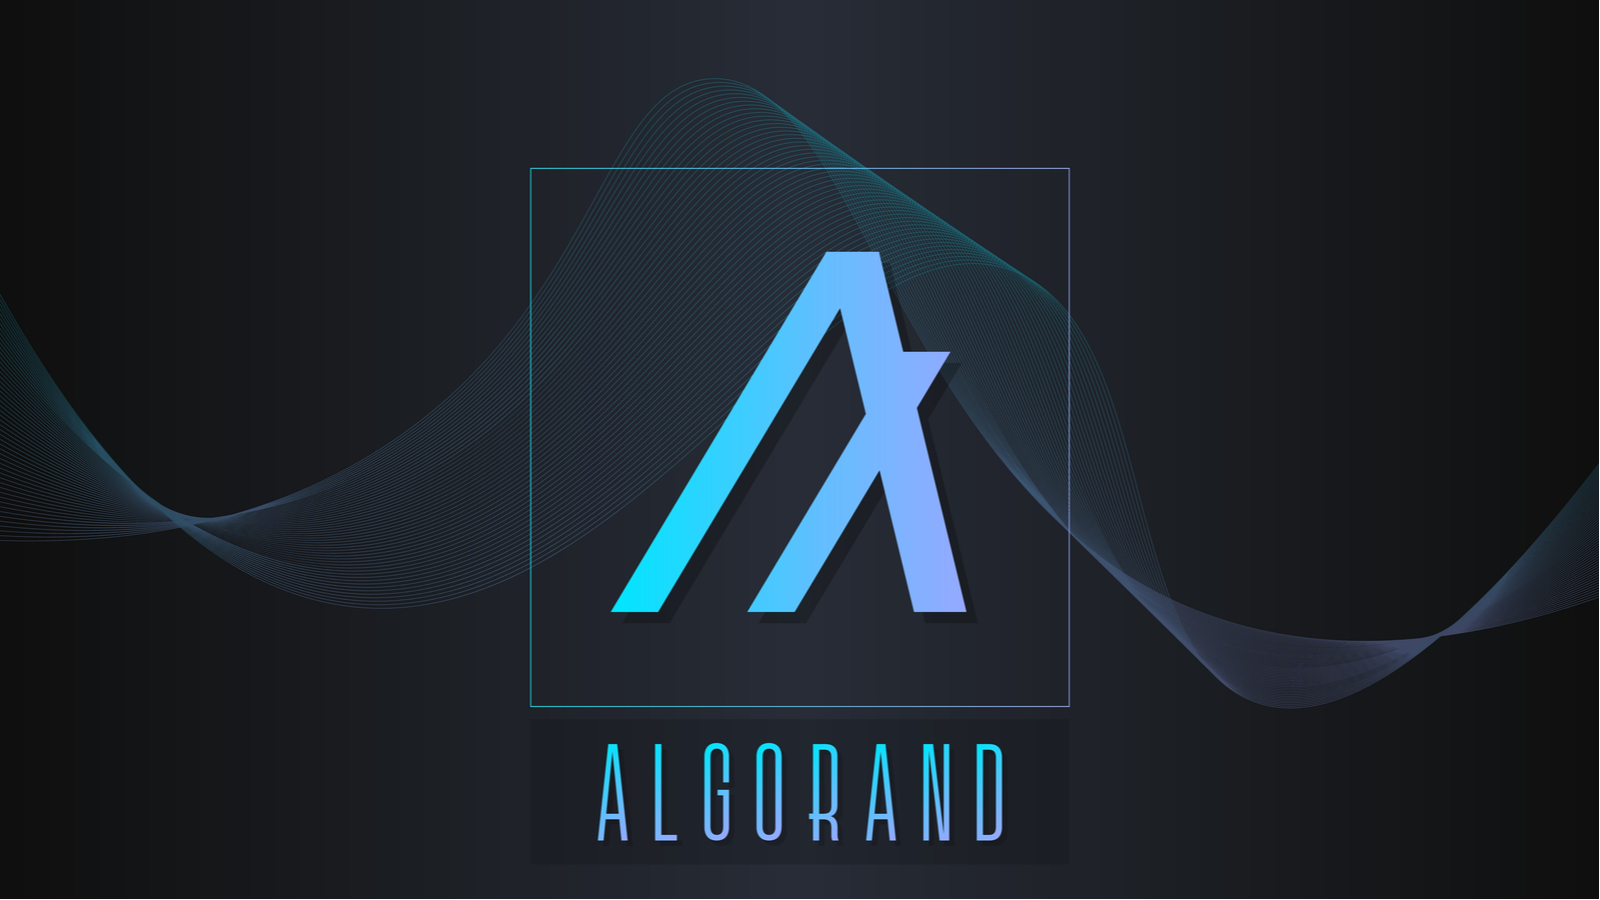 Algorand logo in light blue against a simple dark-colored, futuristic-looking background Algorand Price Predictions